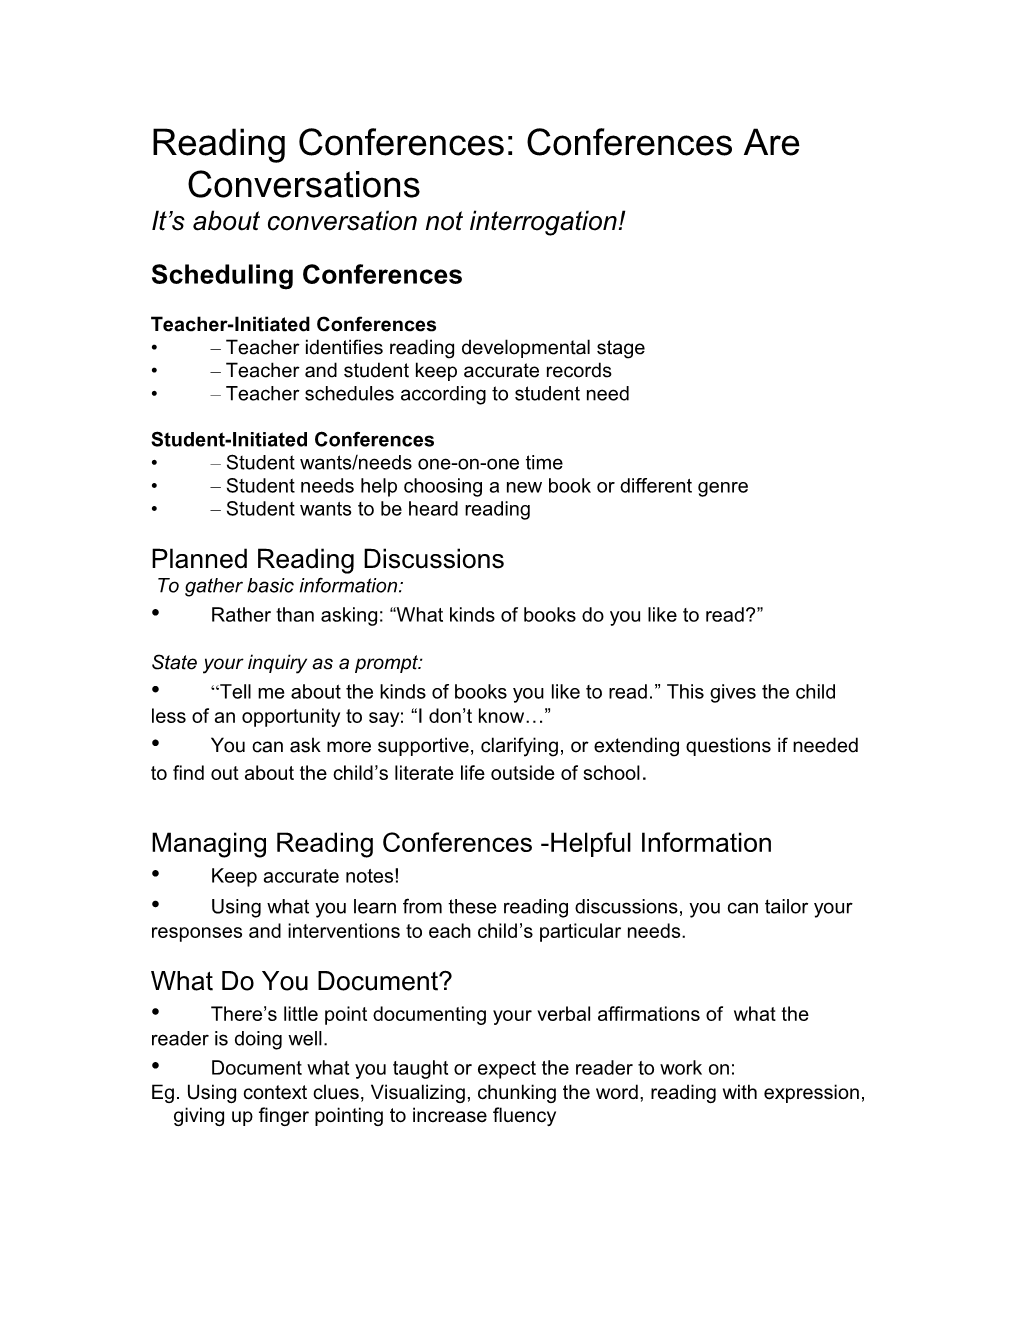 Conferences Are Conversations